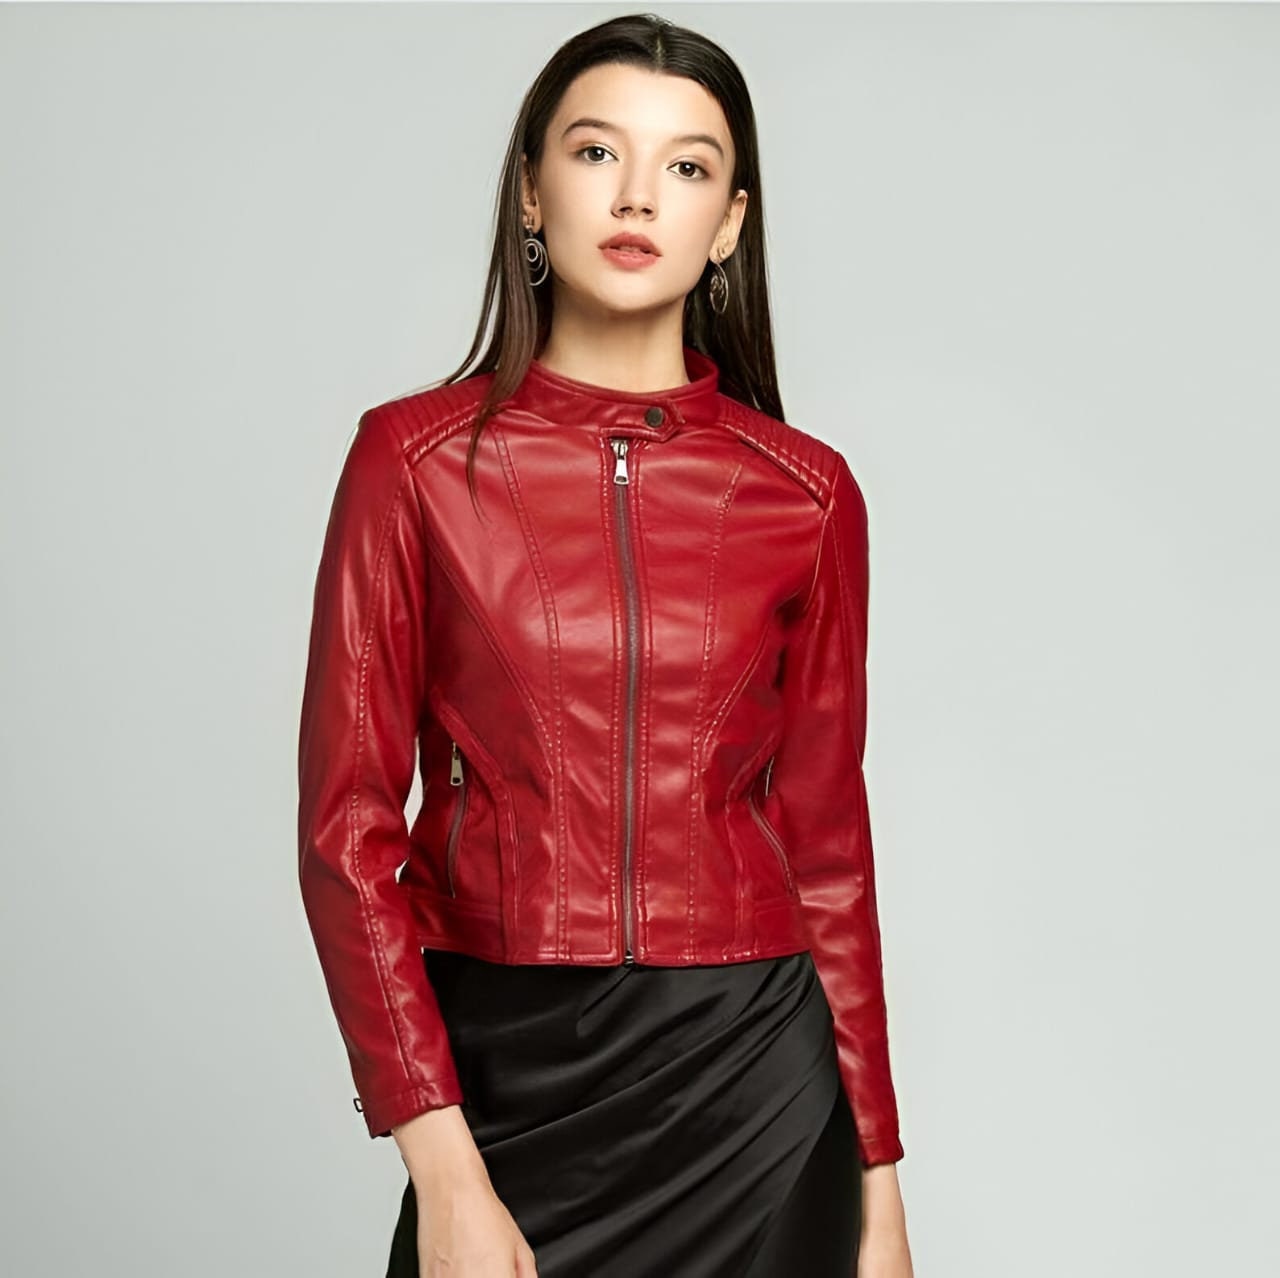 Usaleatherfactory Freaky Millie Red Biker Women Leather Jacket 